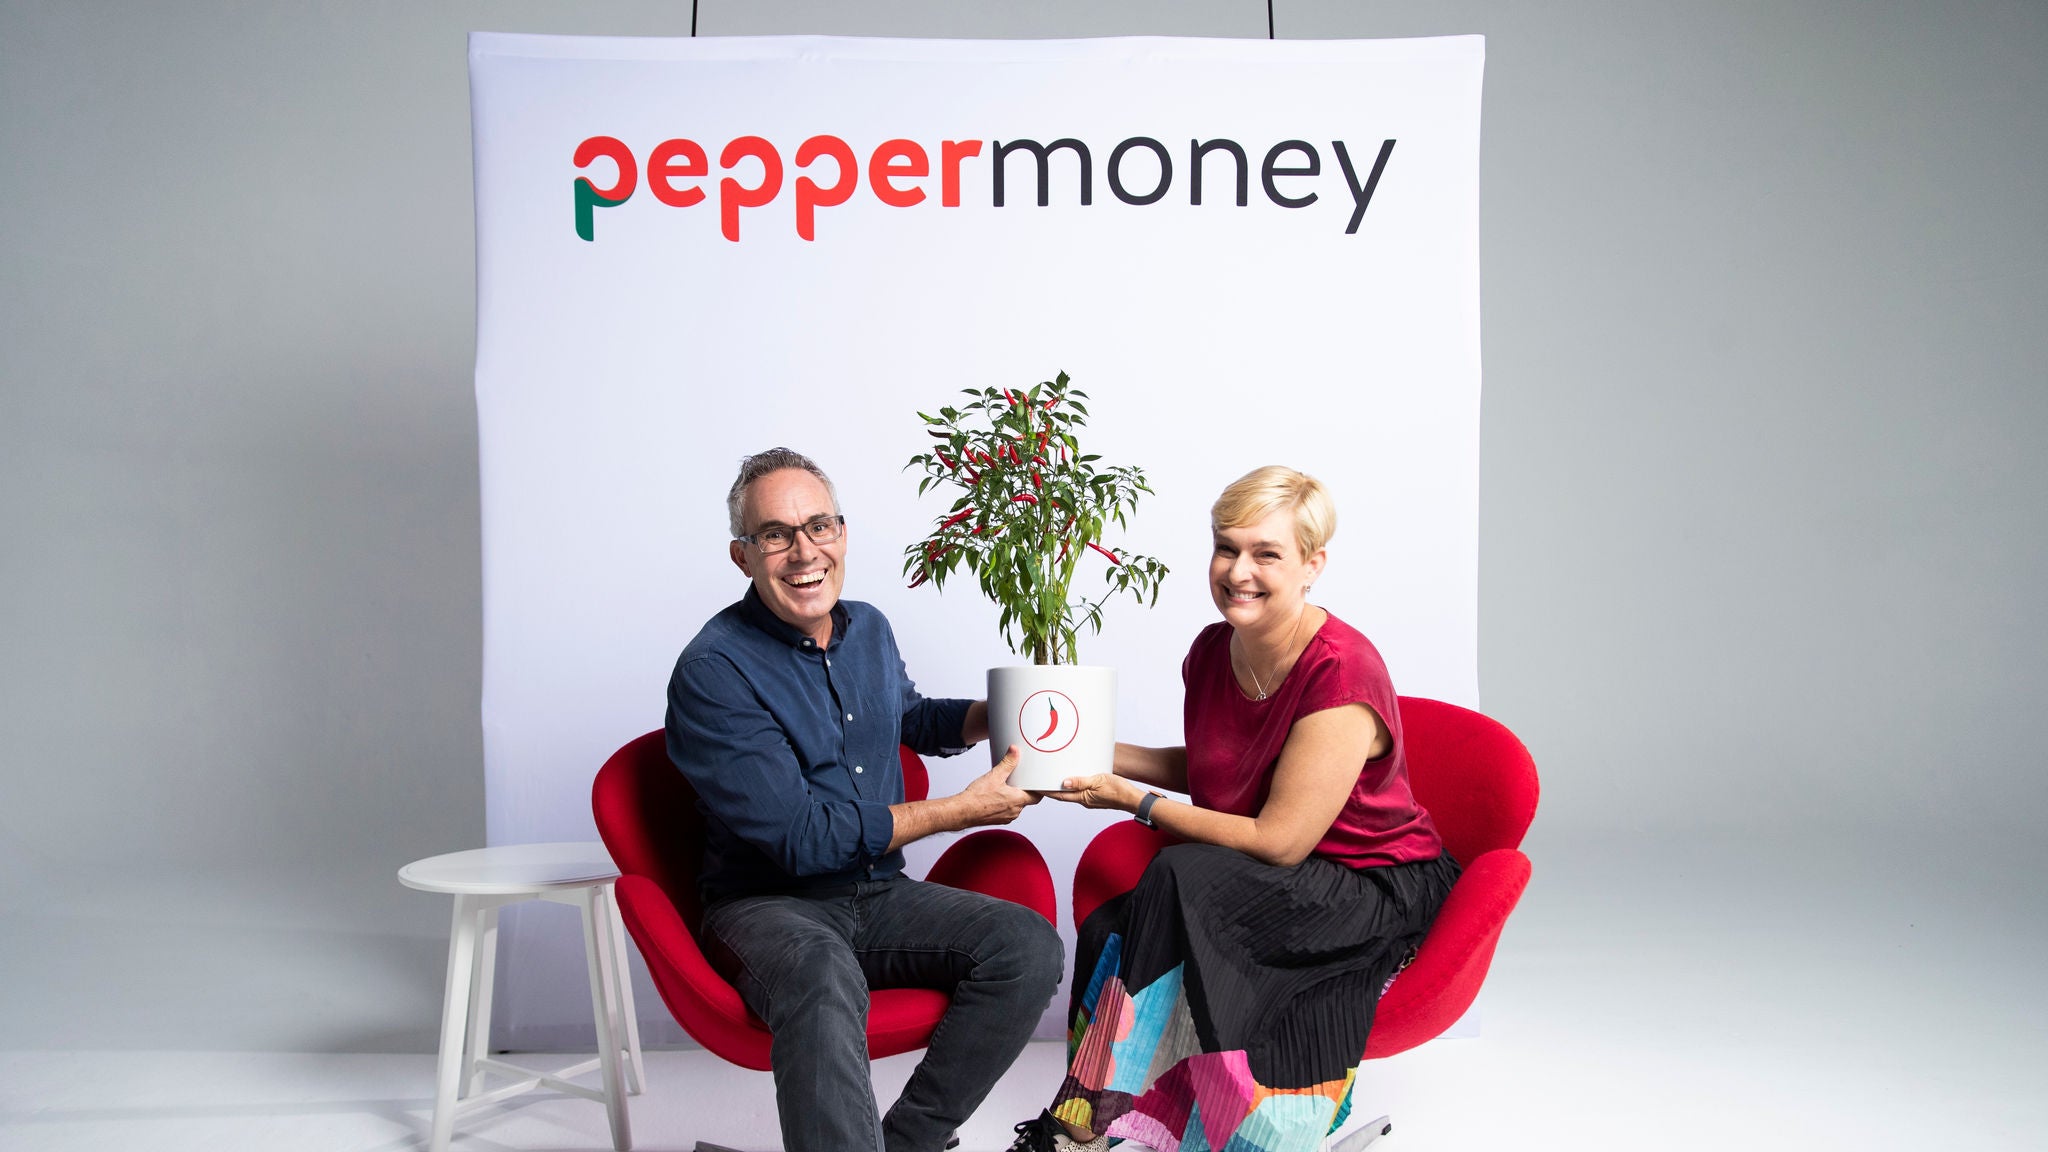 Pepper Money customers Sara and Jason